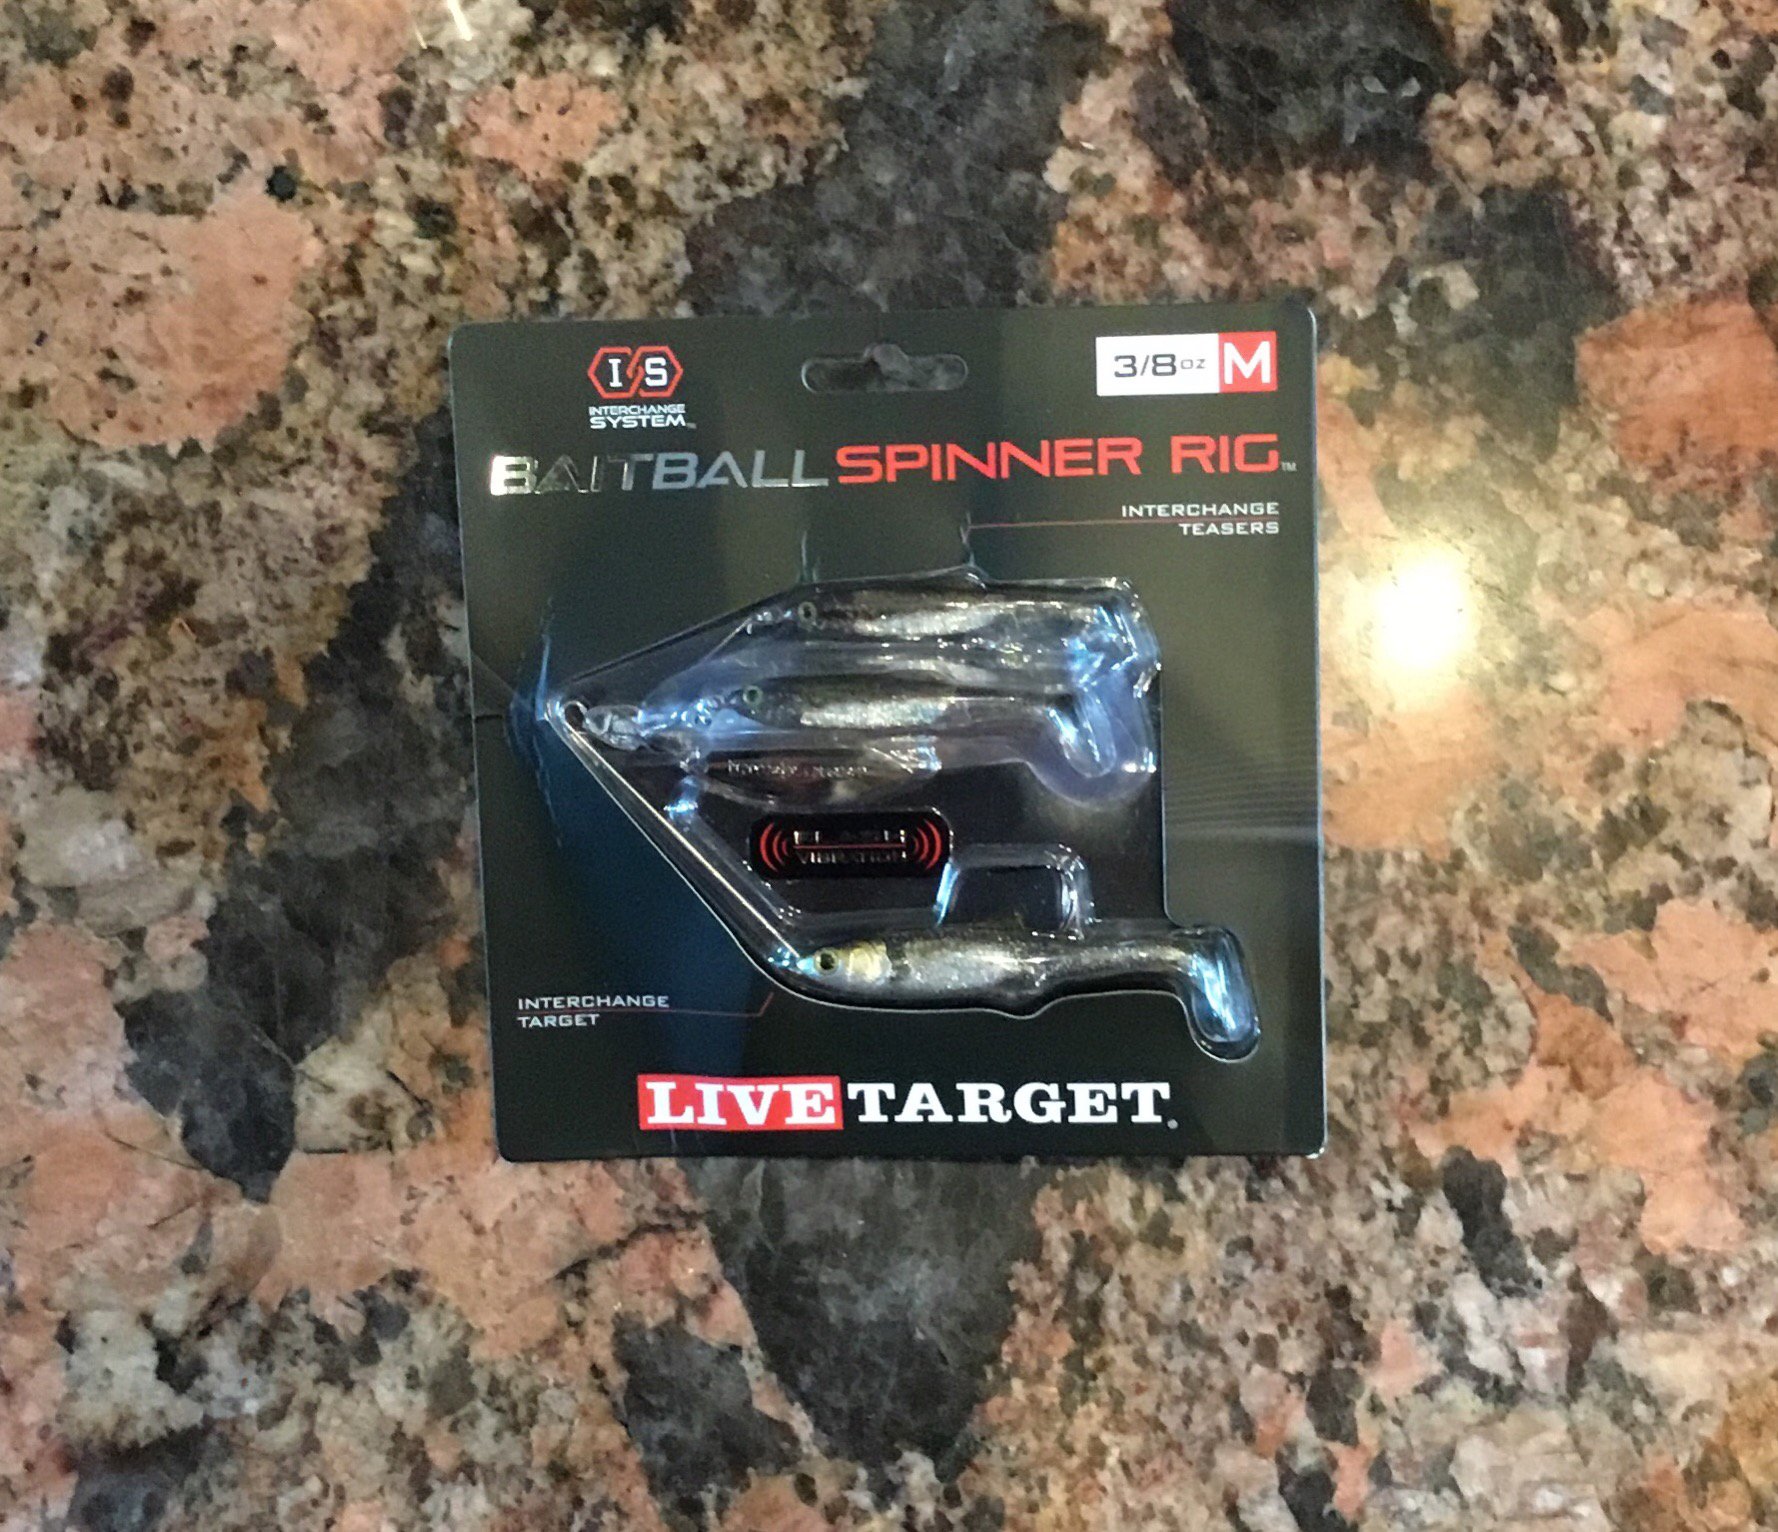 Live Target Baitball Spinner Rig Interchange Pack - Smoke/Silver Medium